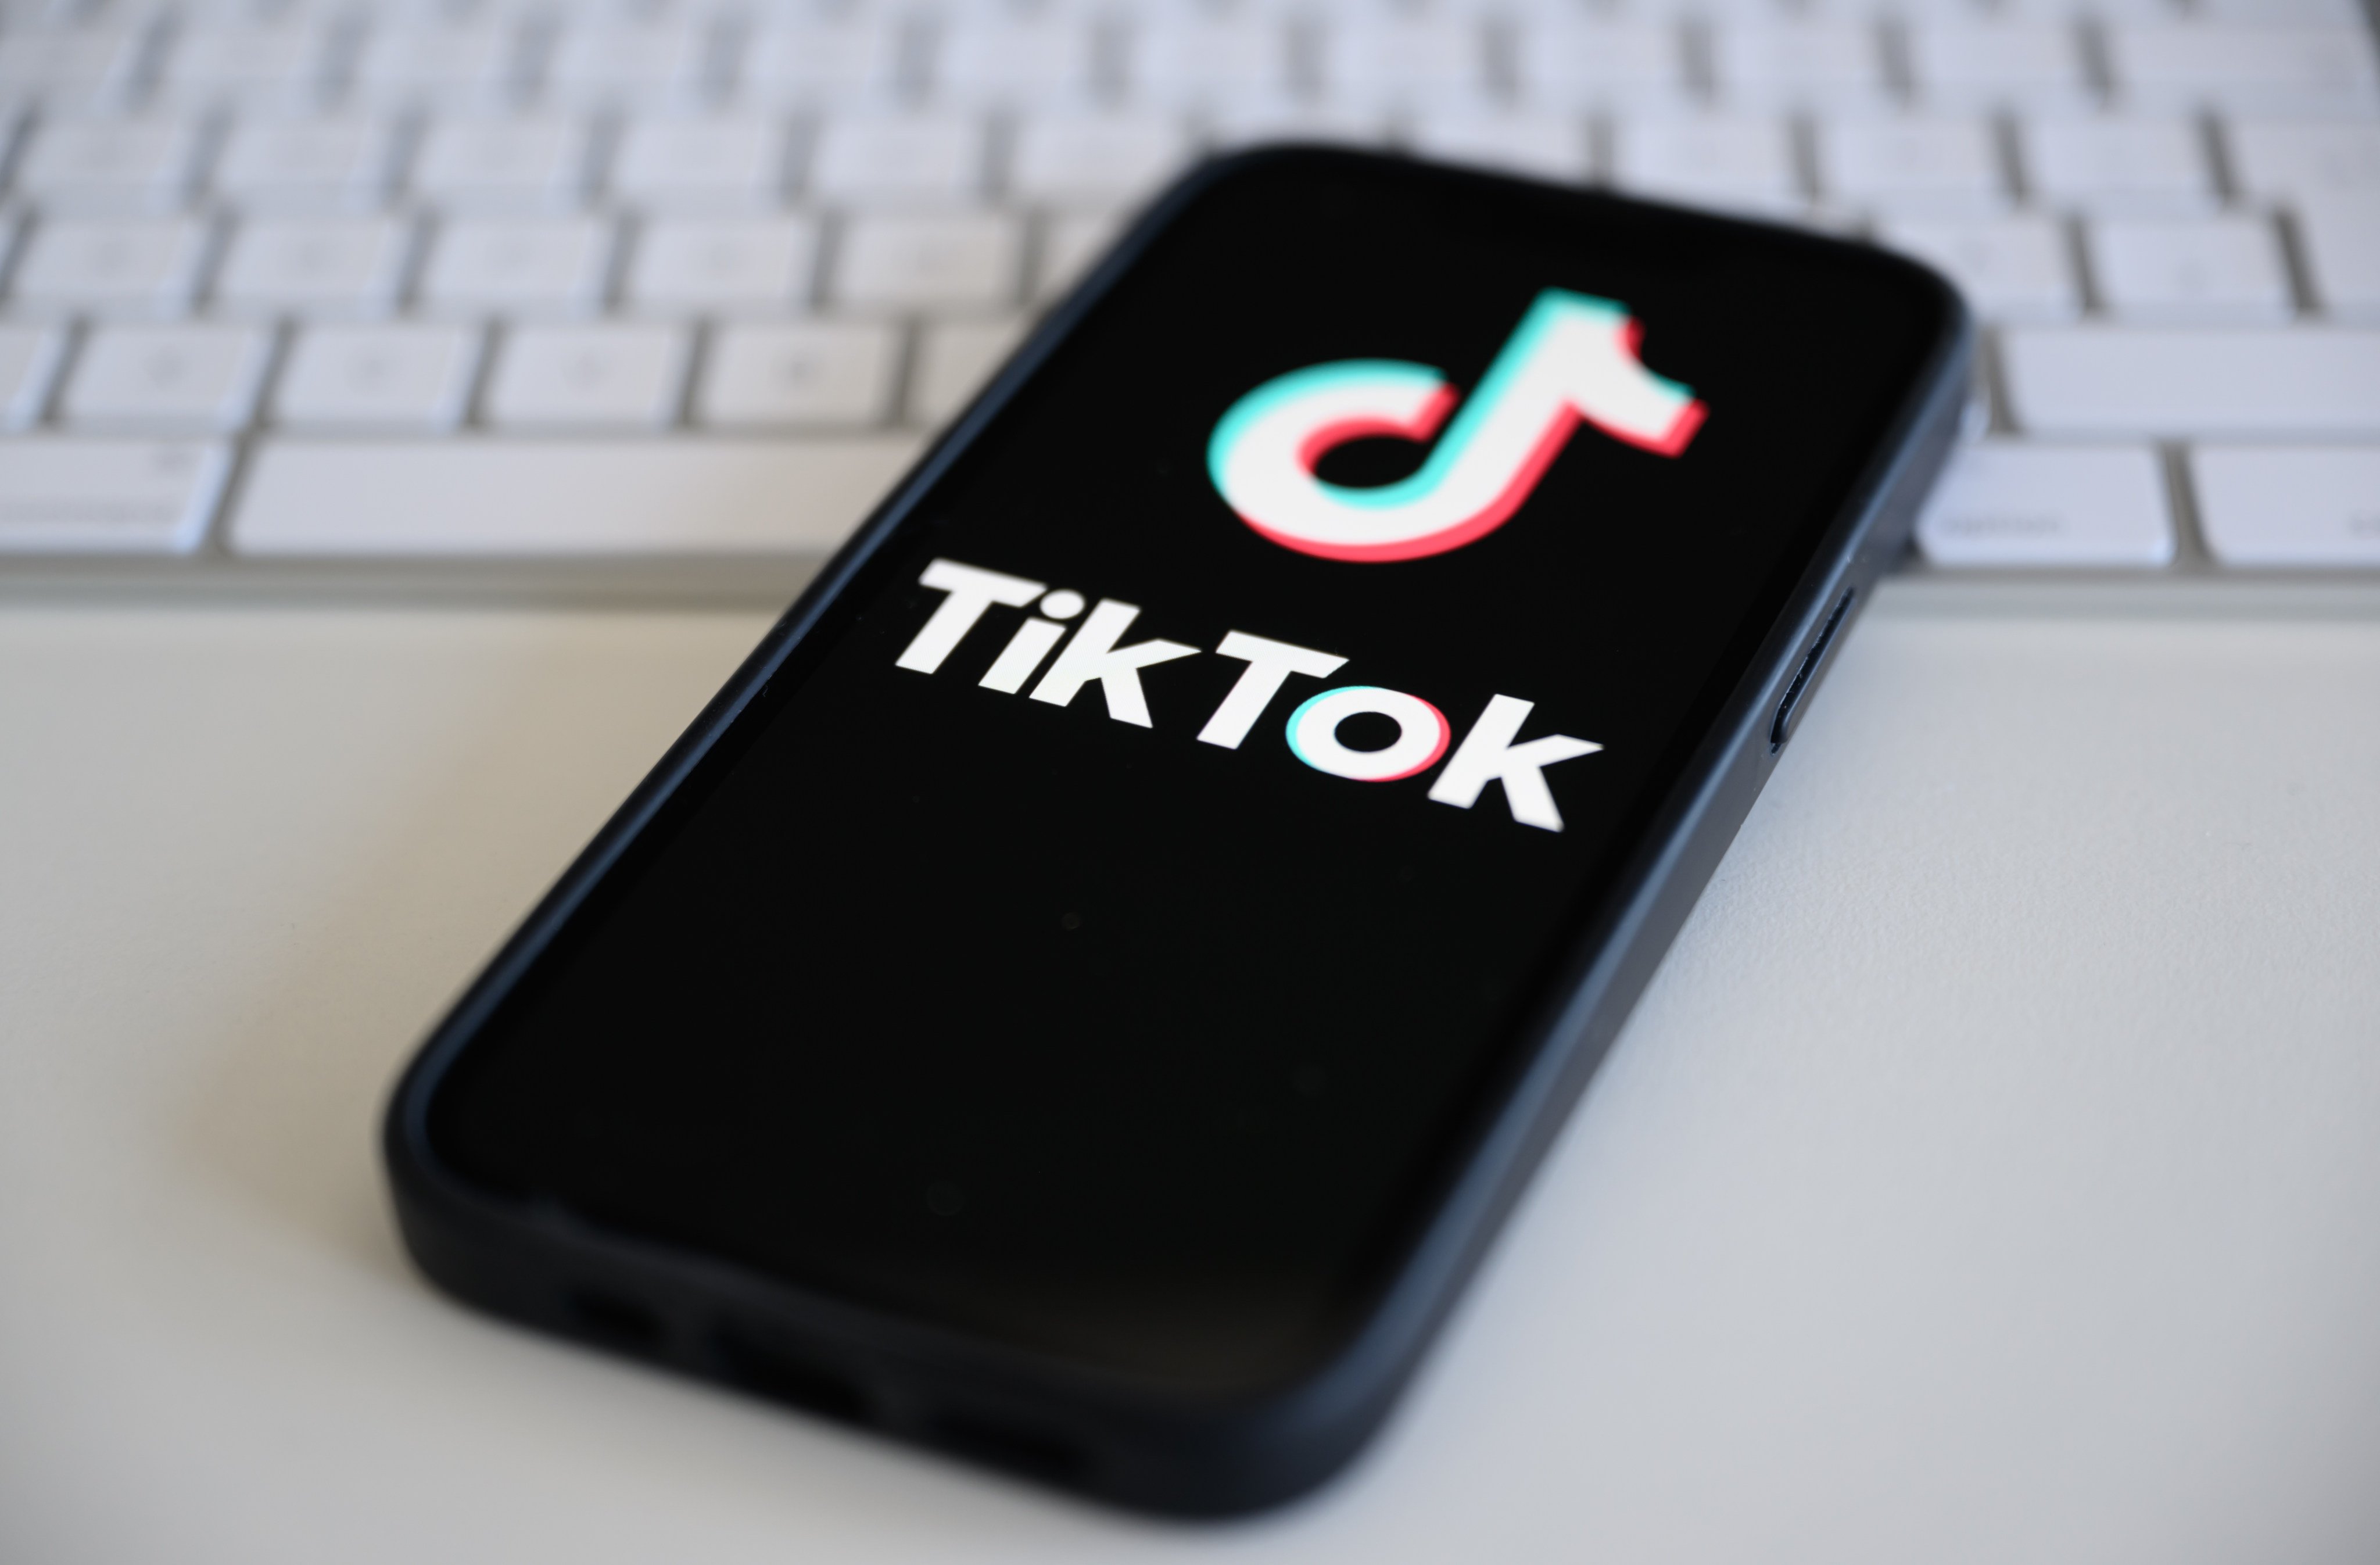 The TikTok logo on a smartphone. Photo: dpa